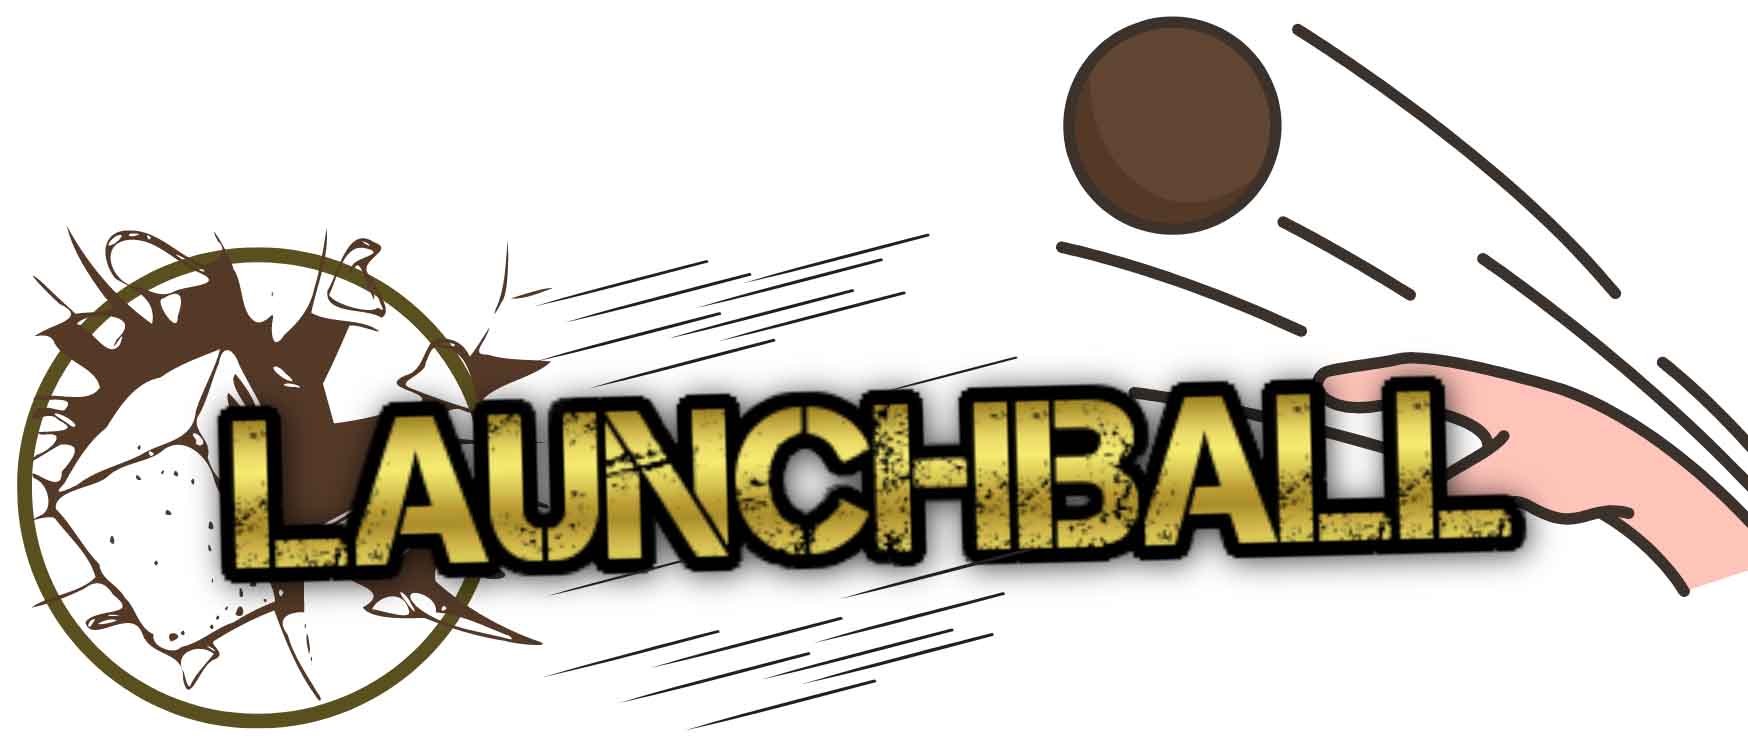 Logo Launchball